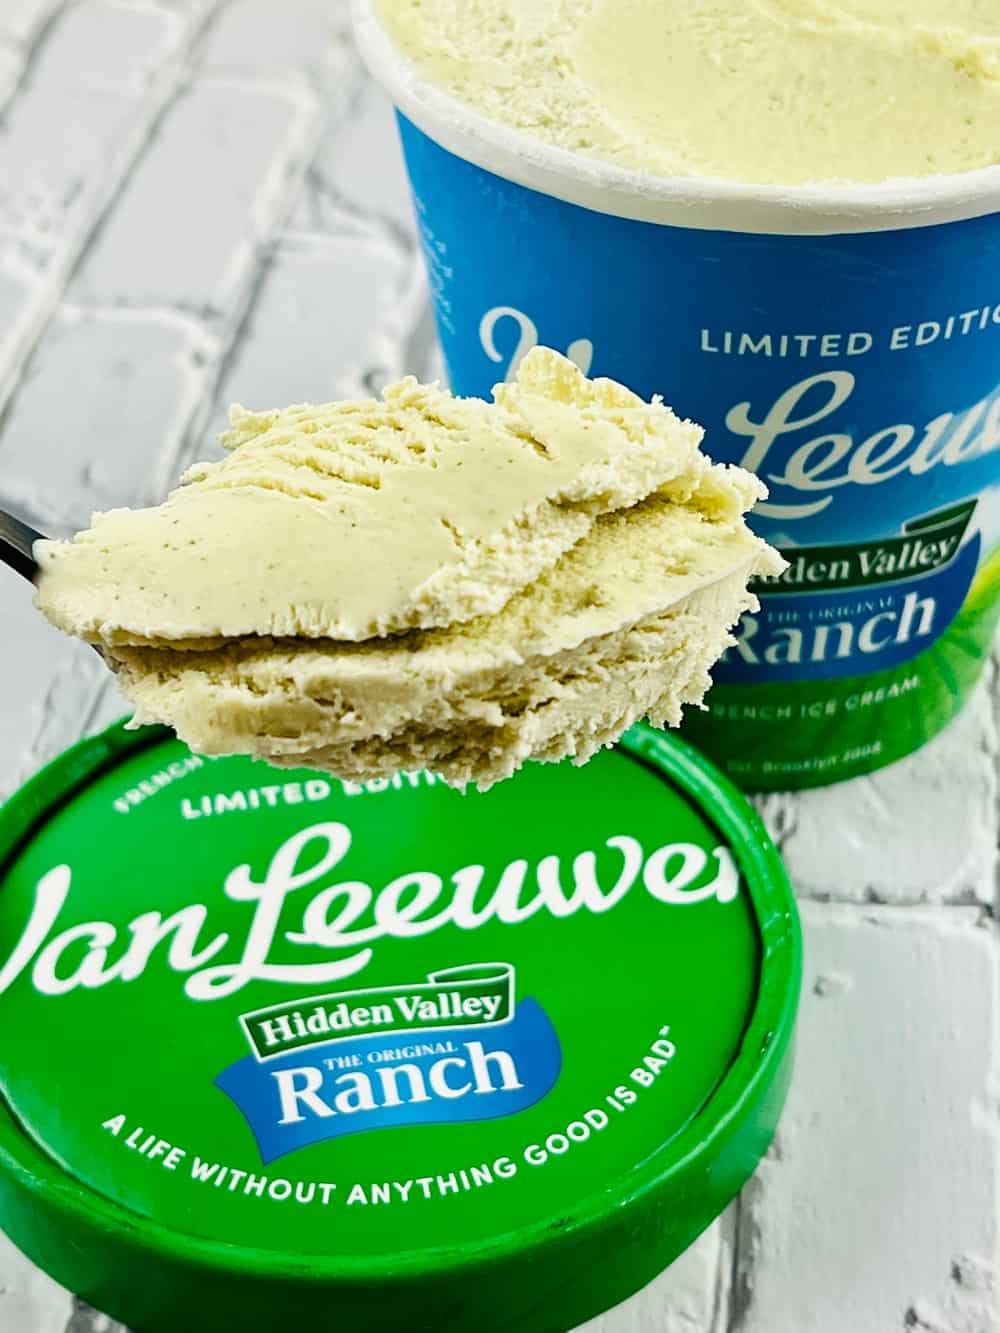 Hidden Valley Ranch Ice Cream